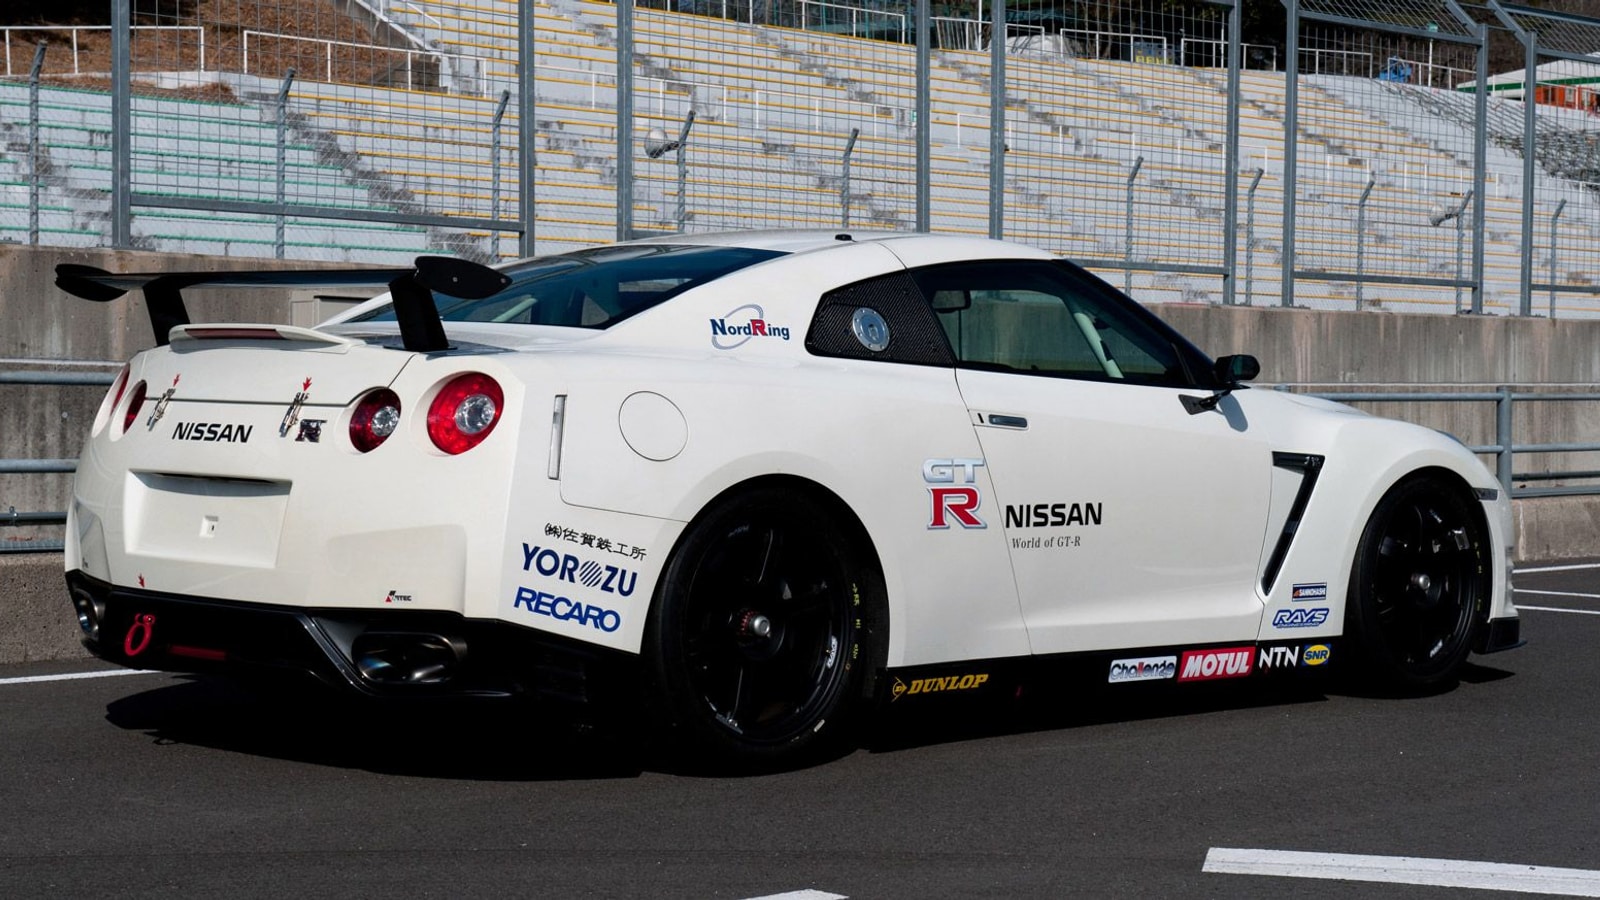 2013 Nissan GT-R (Club Track Edition) entering Nürburgring 24 Hours